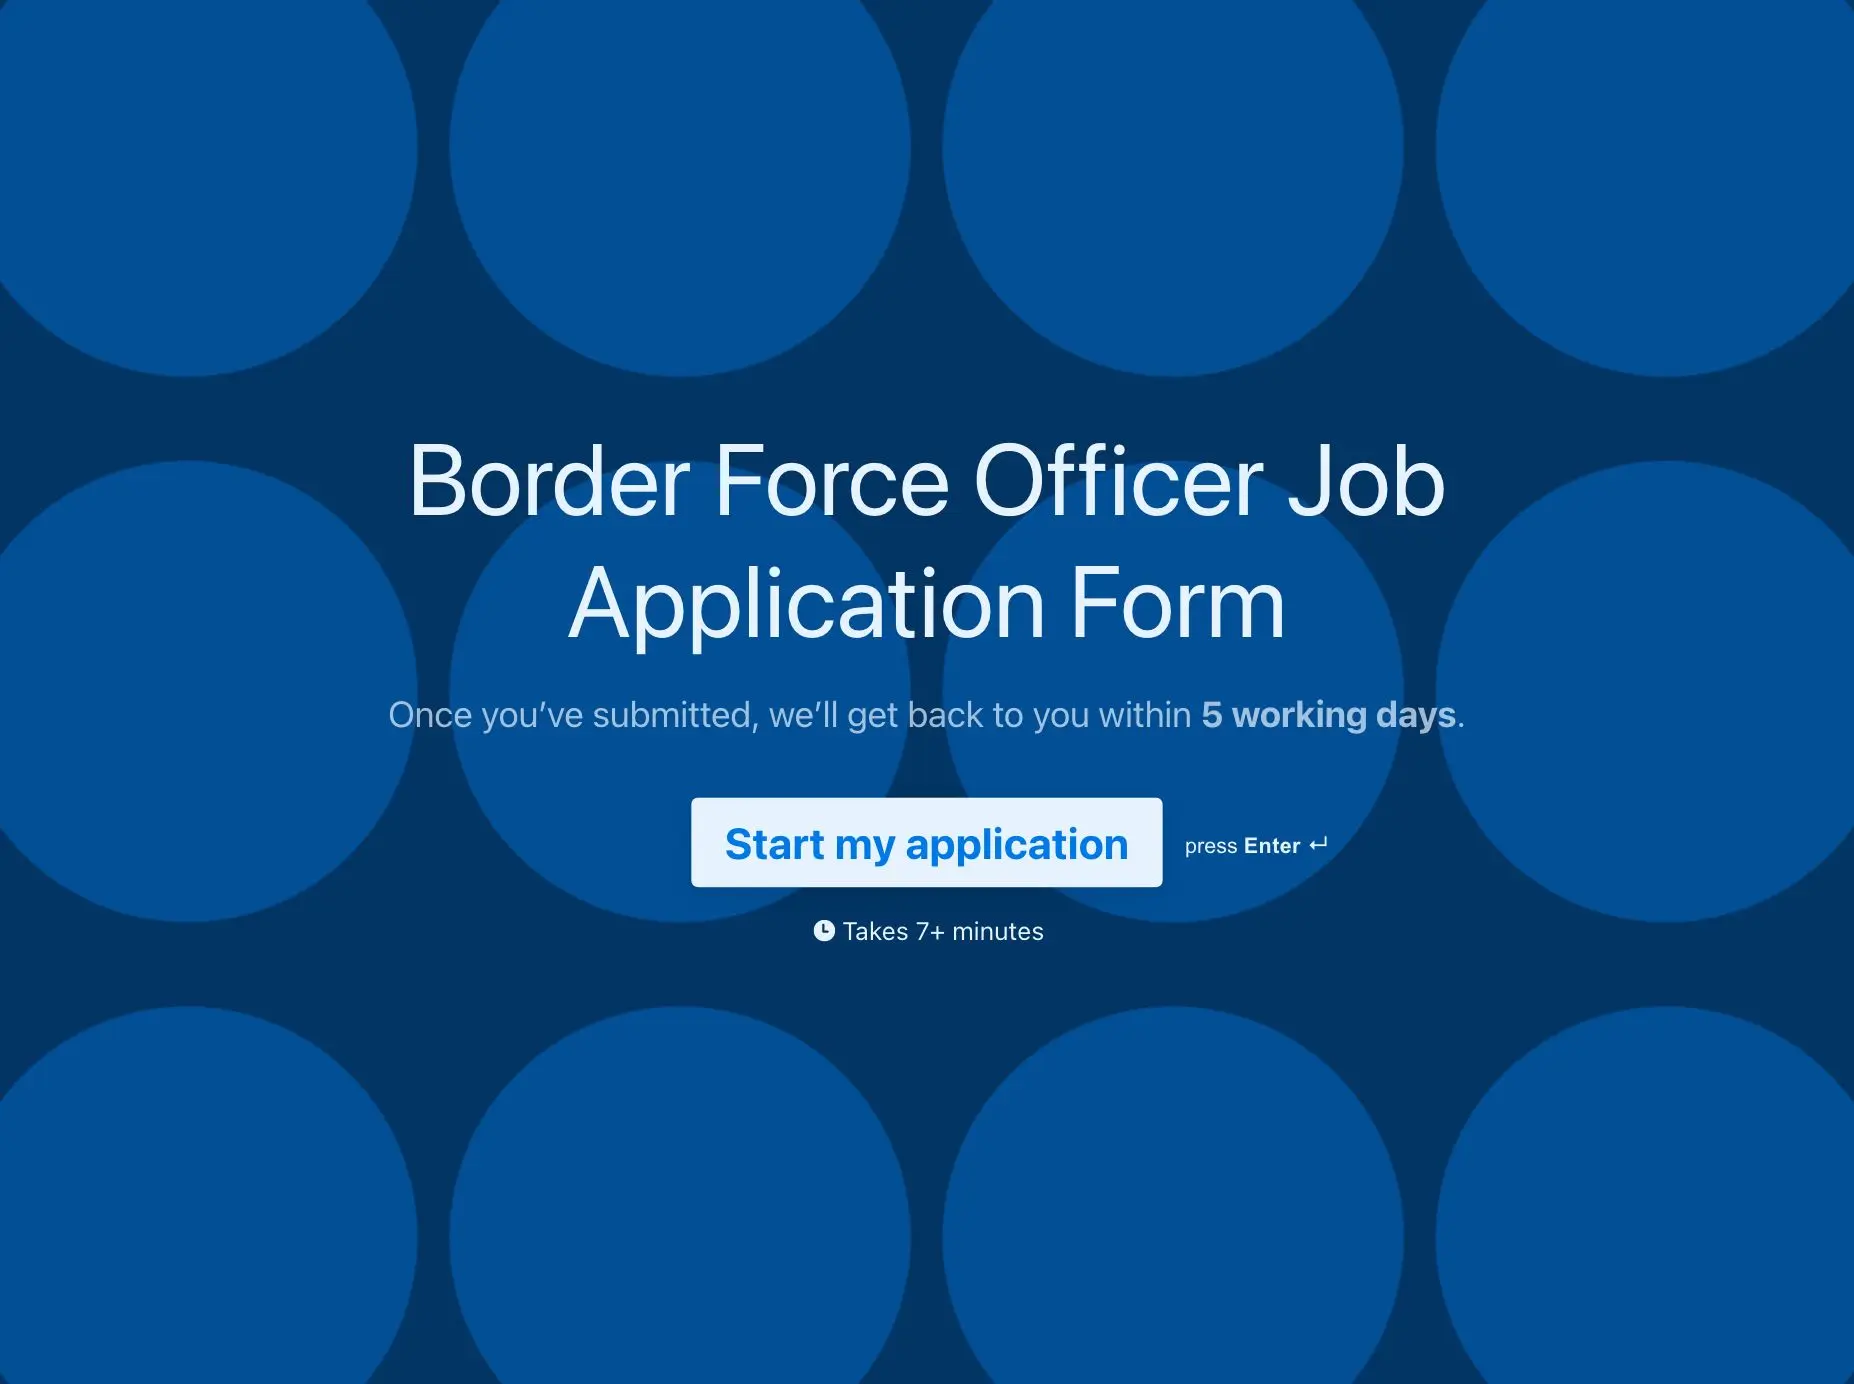 Border Force Officer Job Application Form Template Hero